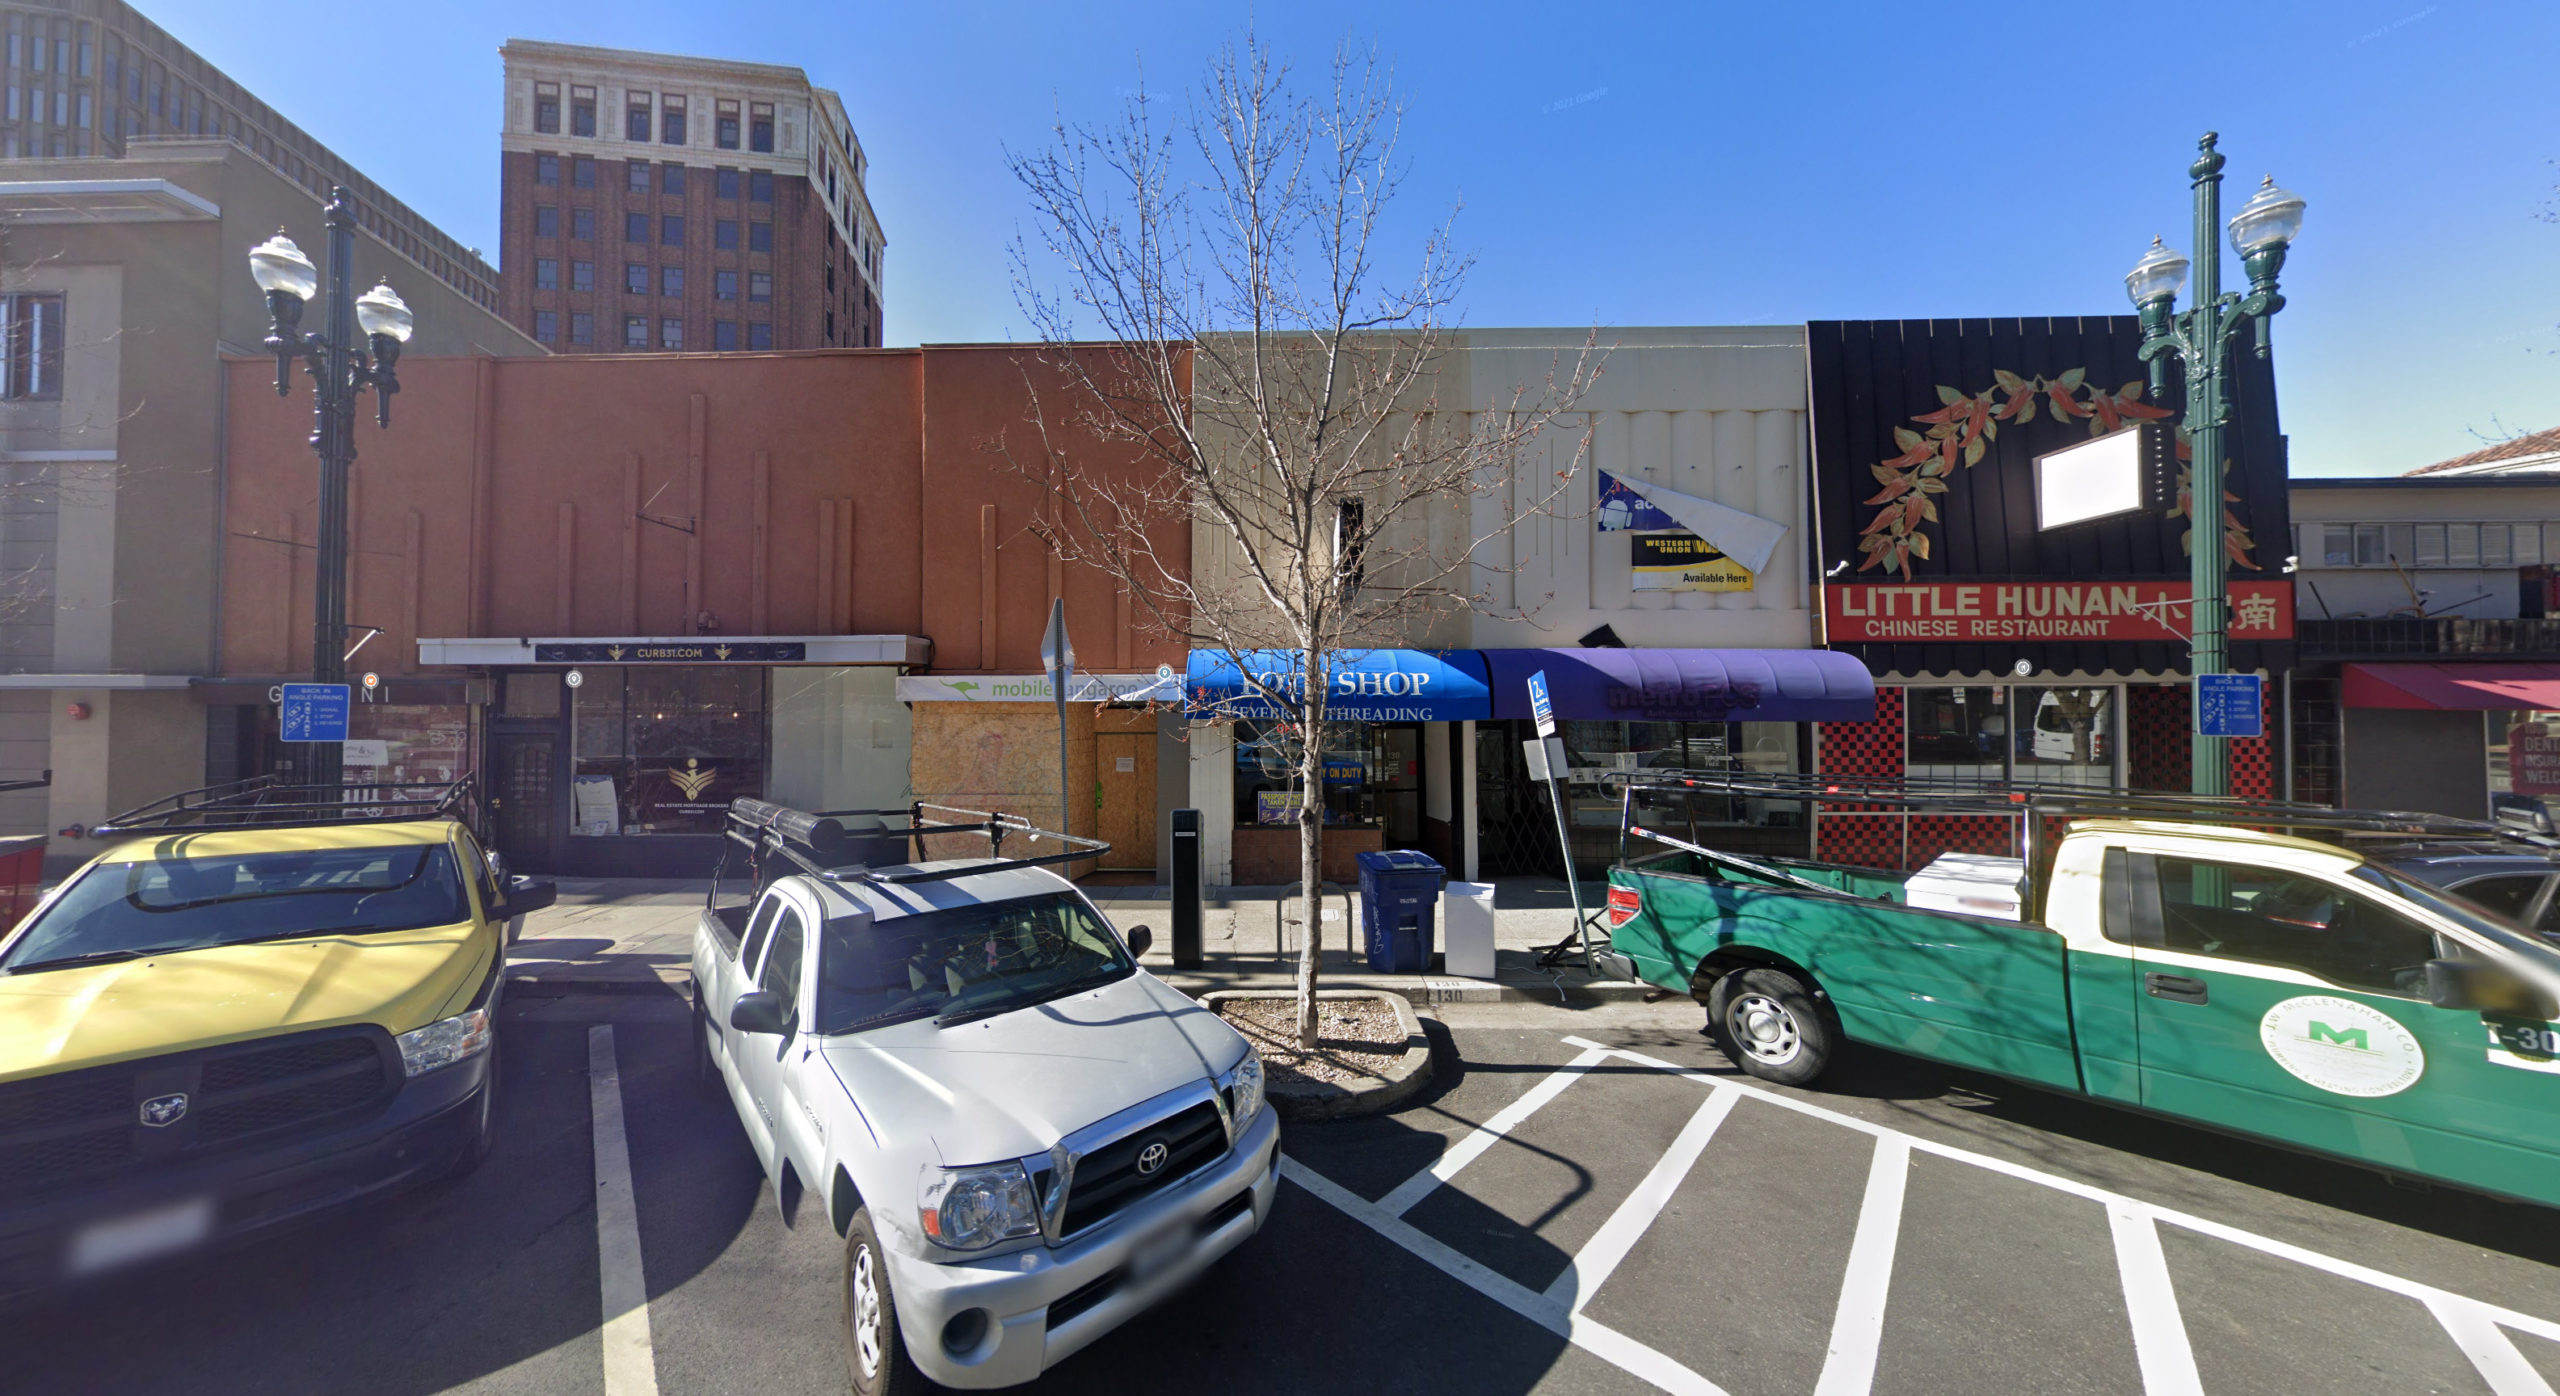 130-134 Berkeley Square, image via Google Street View